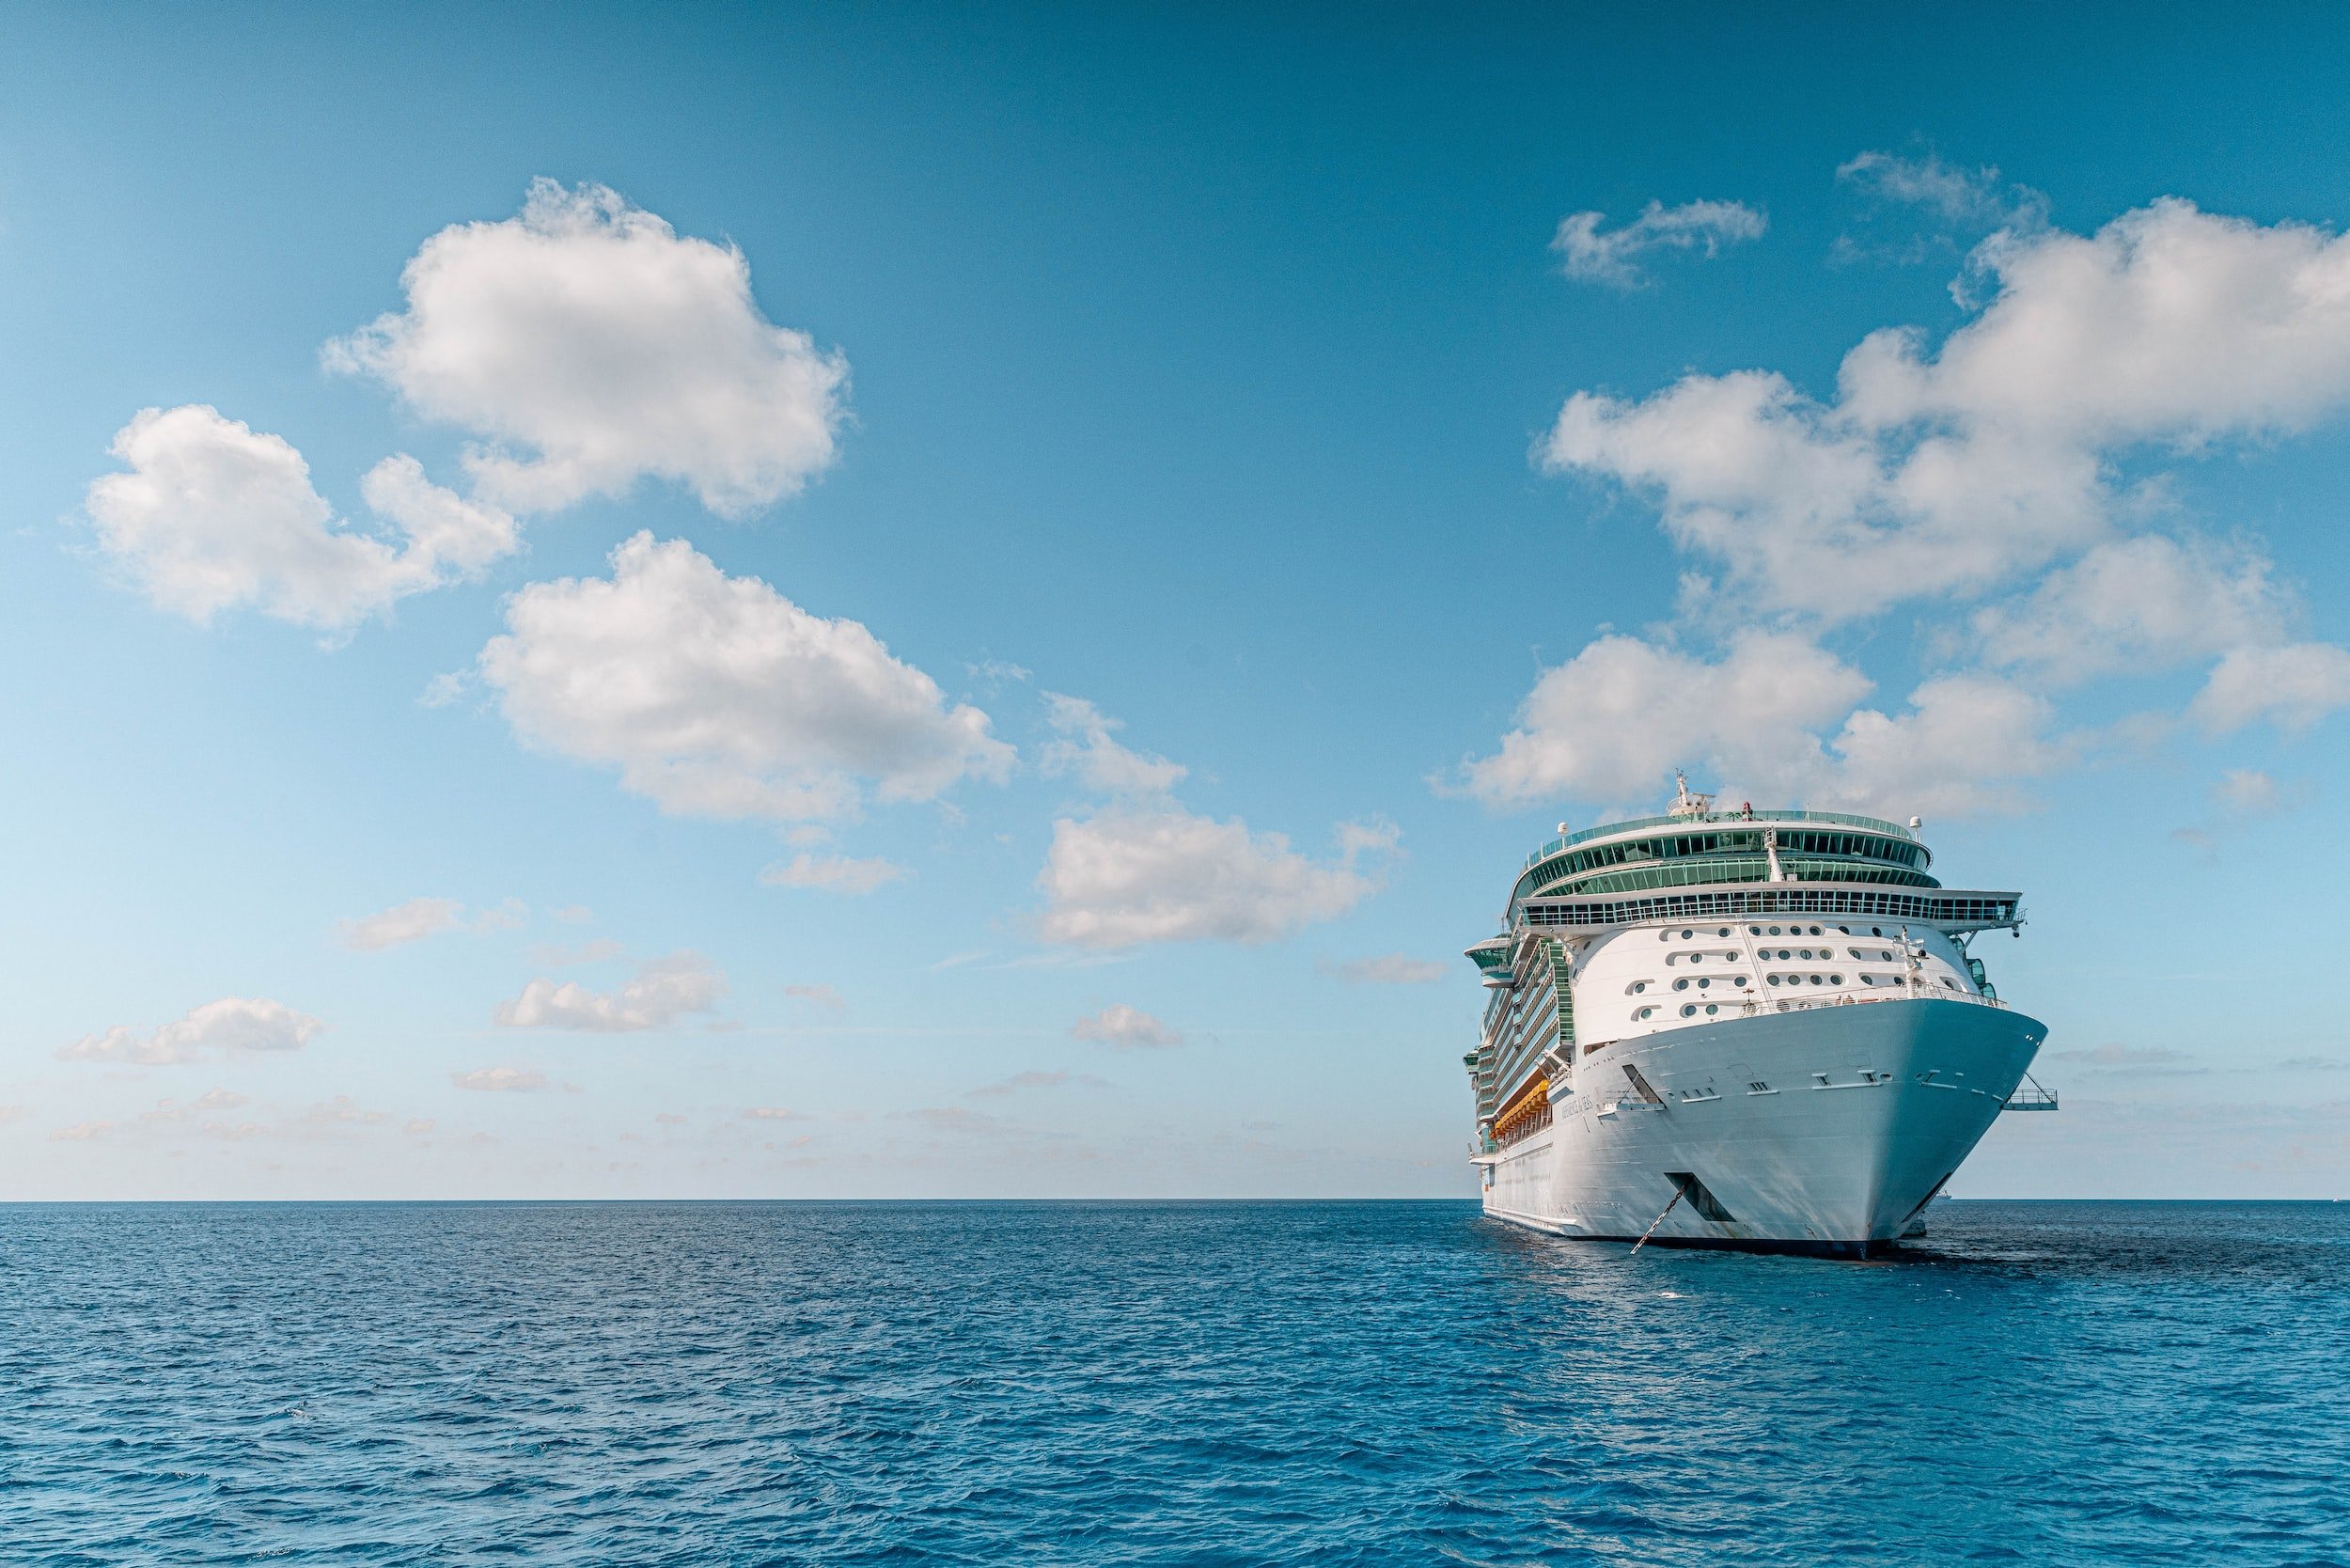 Bermuda allows cruise ship gambling in port